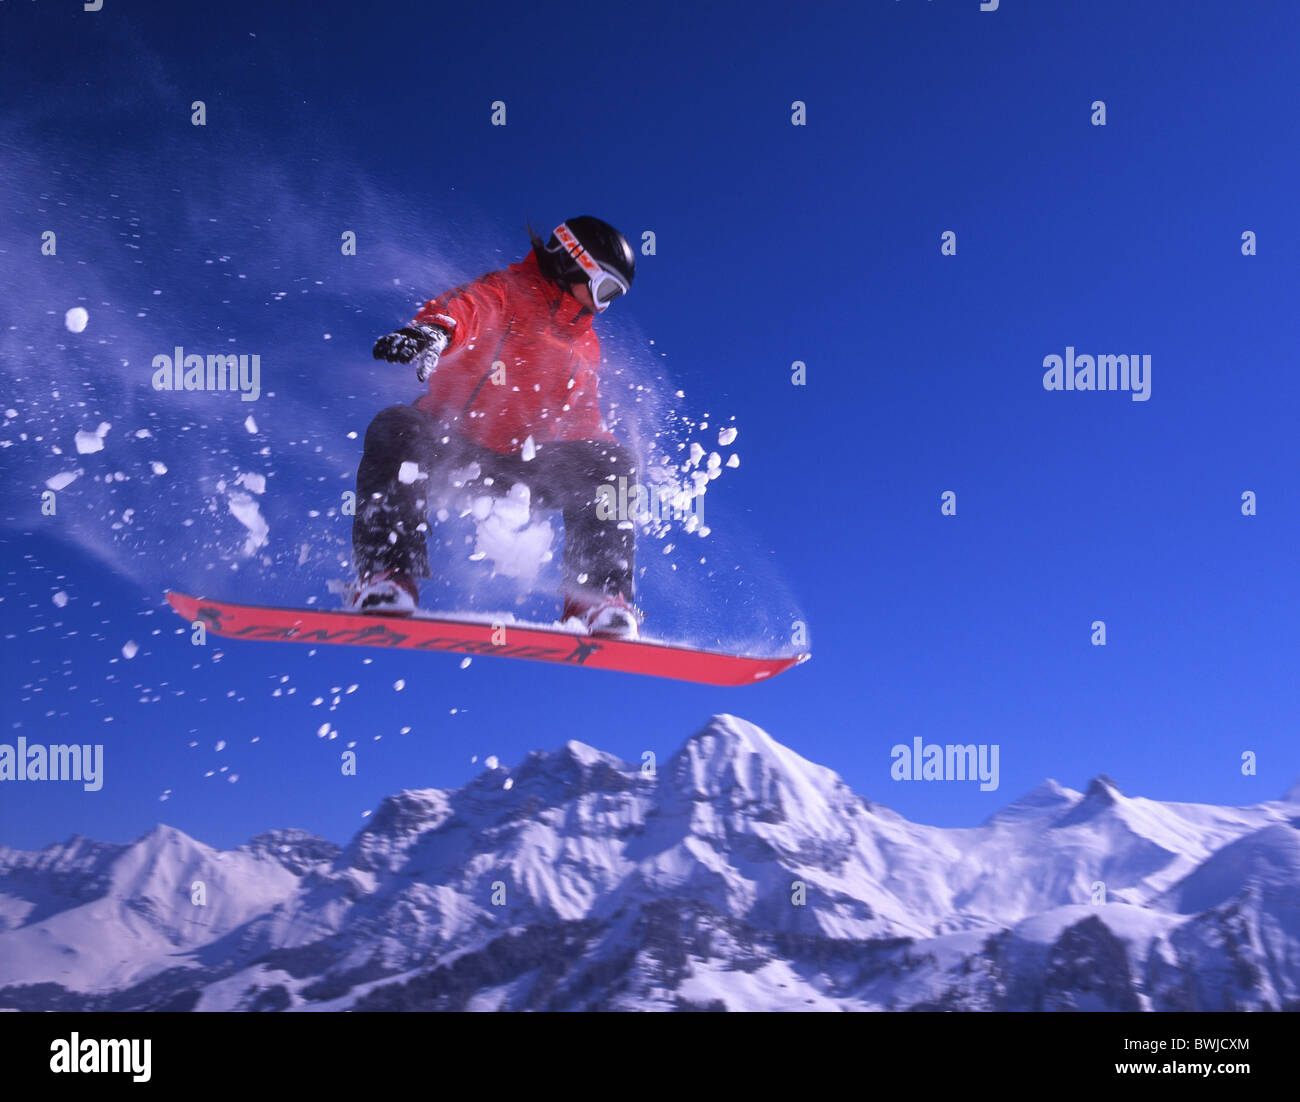 winter snowboard Snowboard Snowboarder jump action Alps deep snow mountains winter sports Switzerland Europ Stock Photo